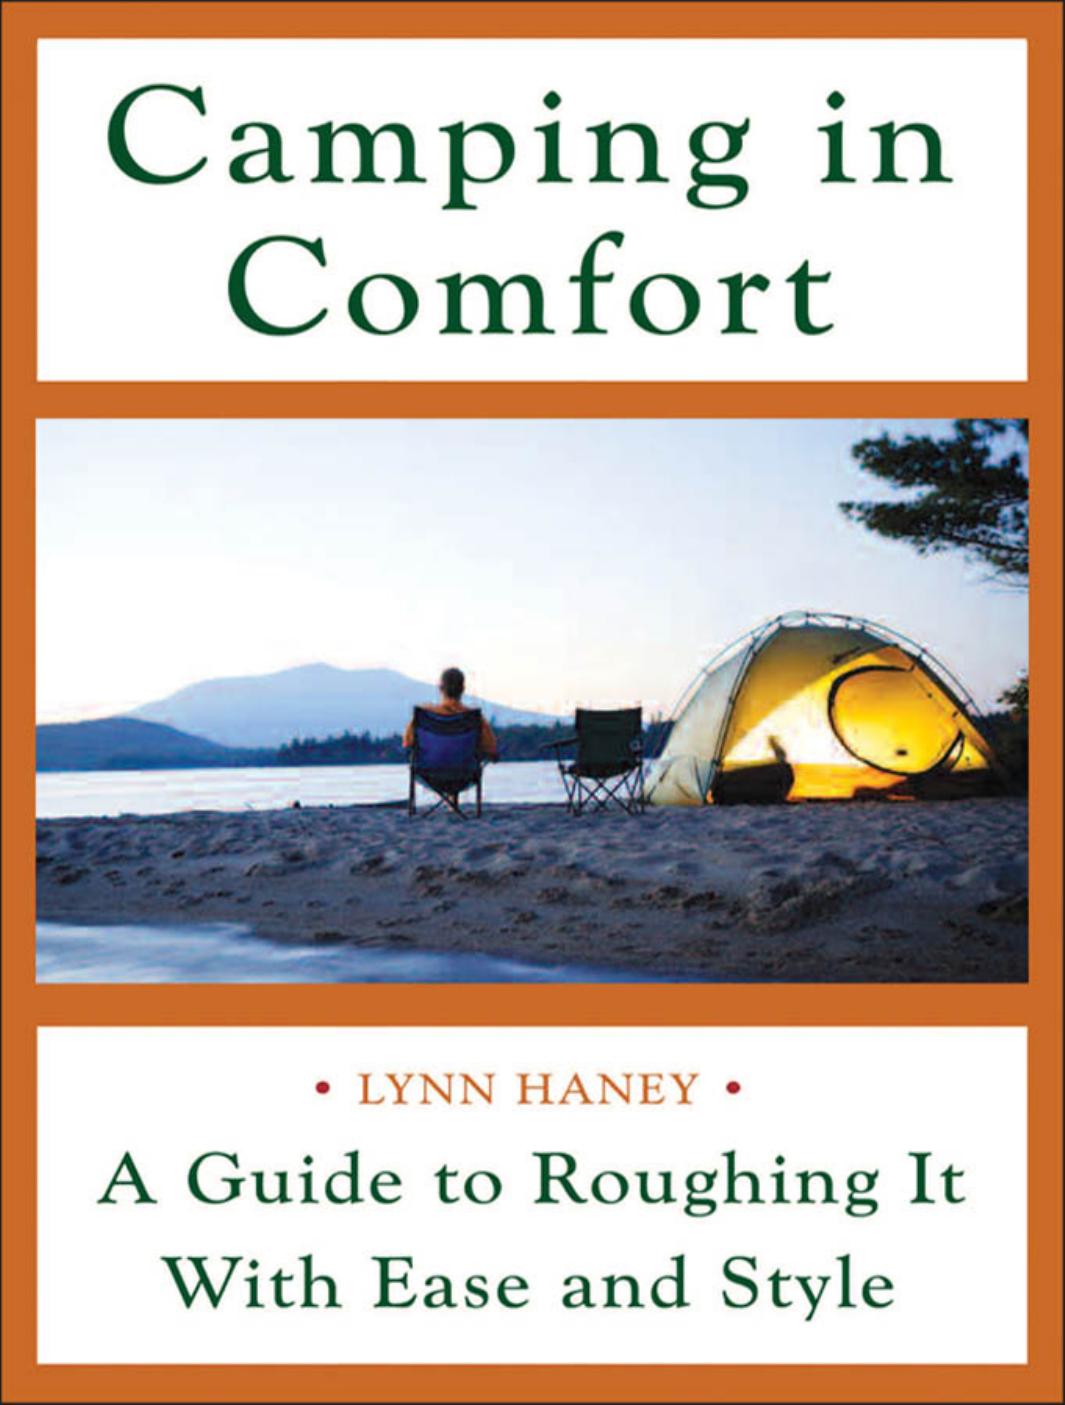 Camping in Comfort by Lynn Haney